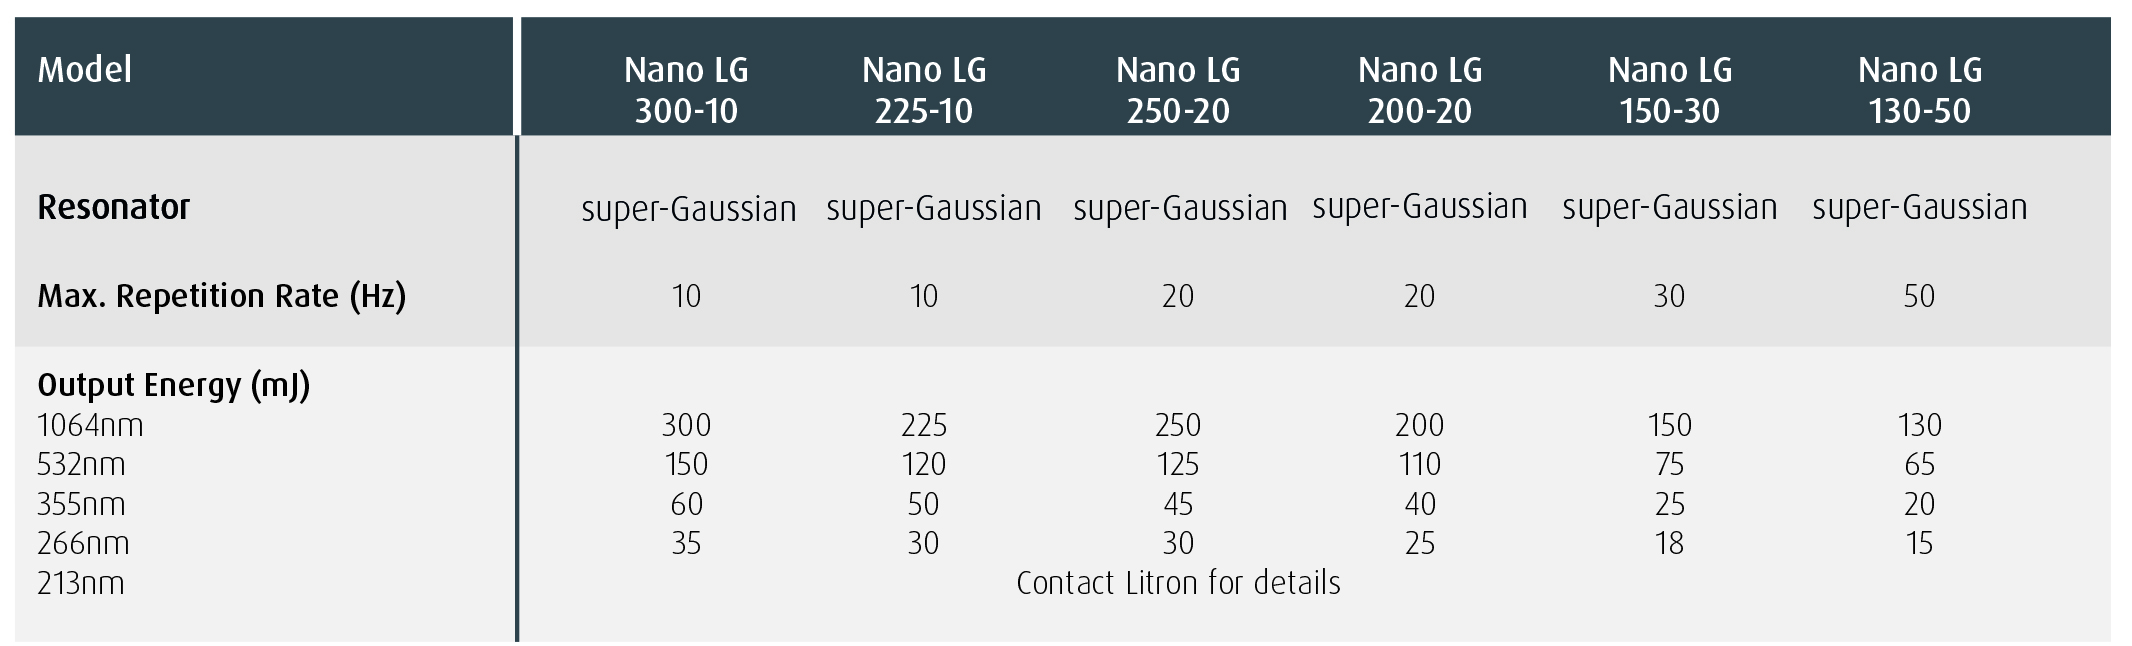 Nano LG Specification Highlights